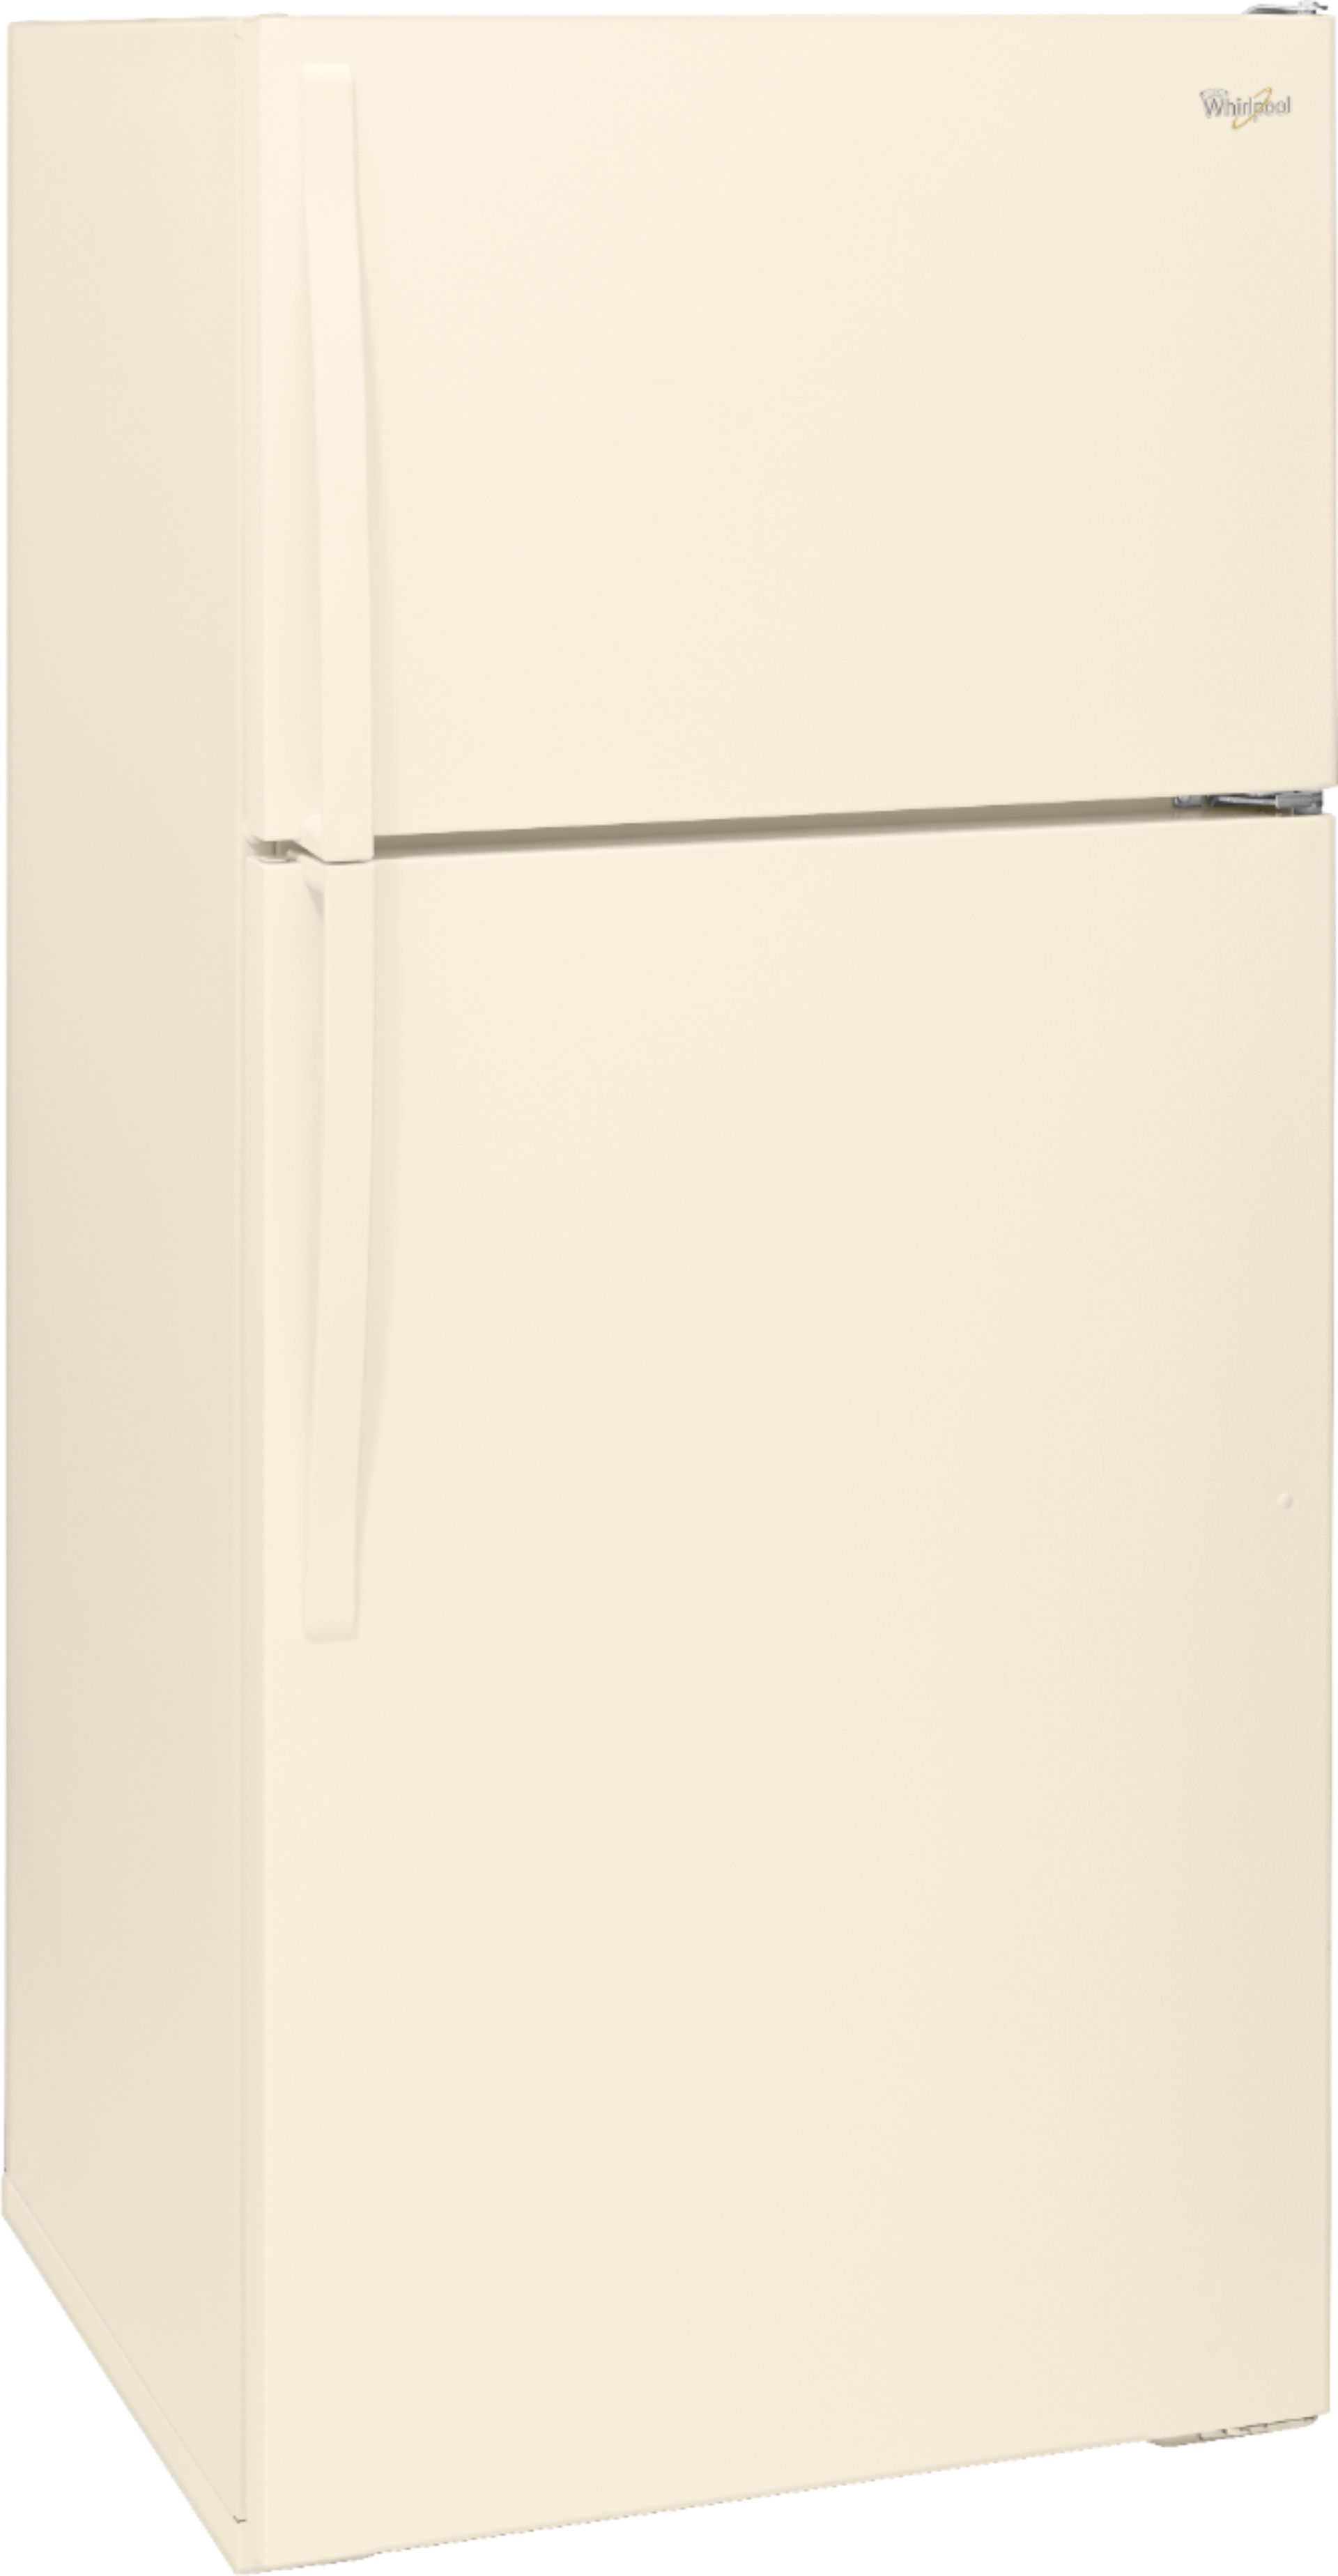 Angle View: Whirlpool - 19.2 Cu. Ft. Top-Freezer Refrigerator - White